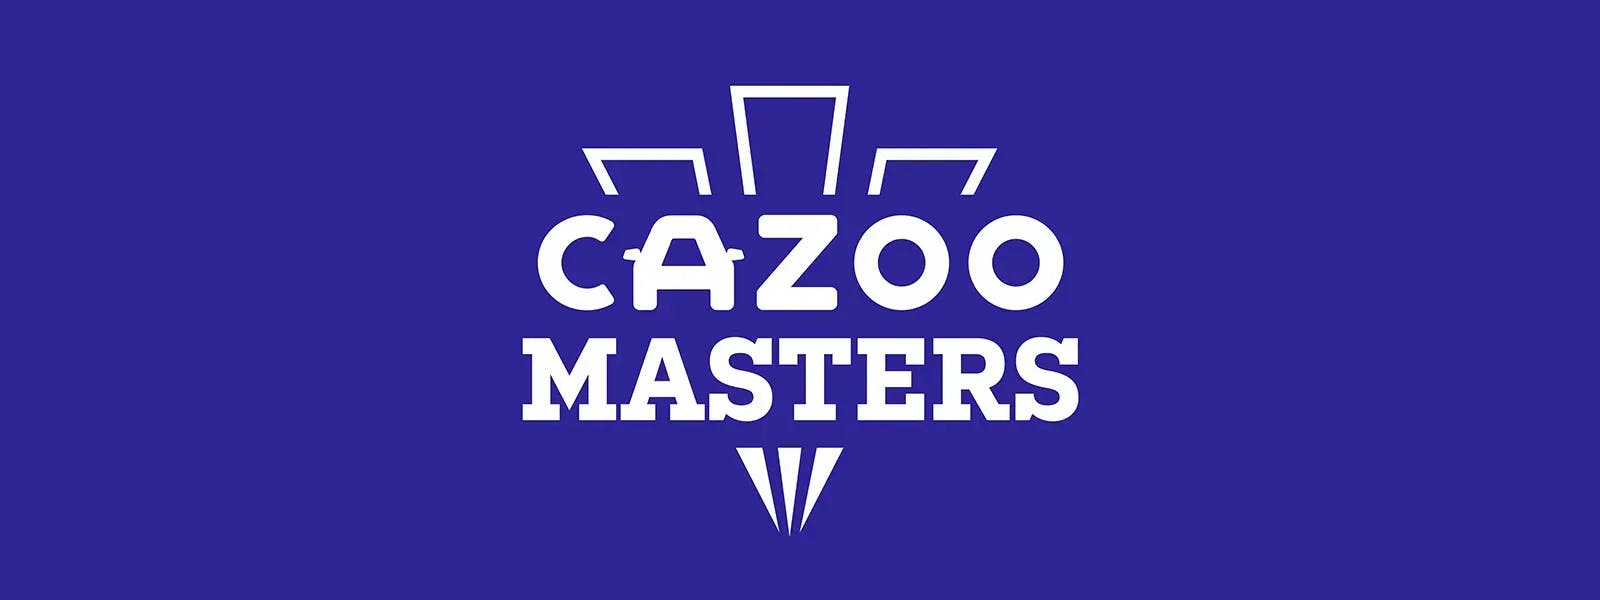 Cazoo_Masters_banner.webp